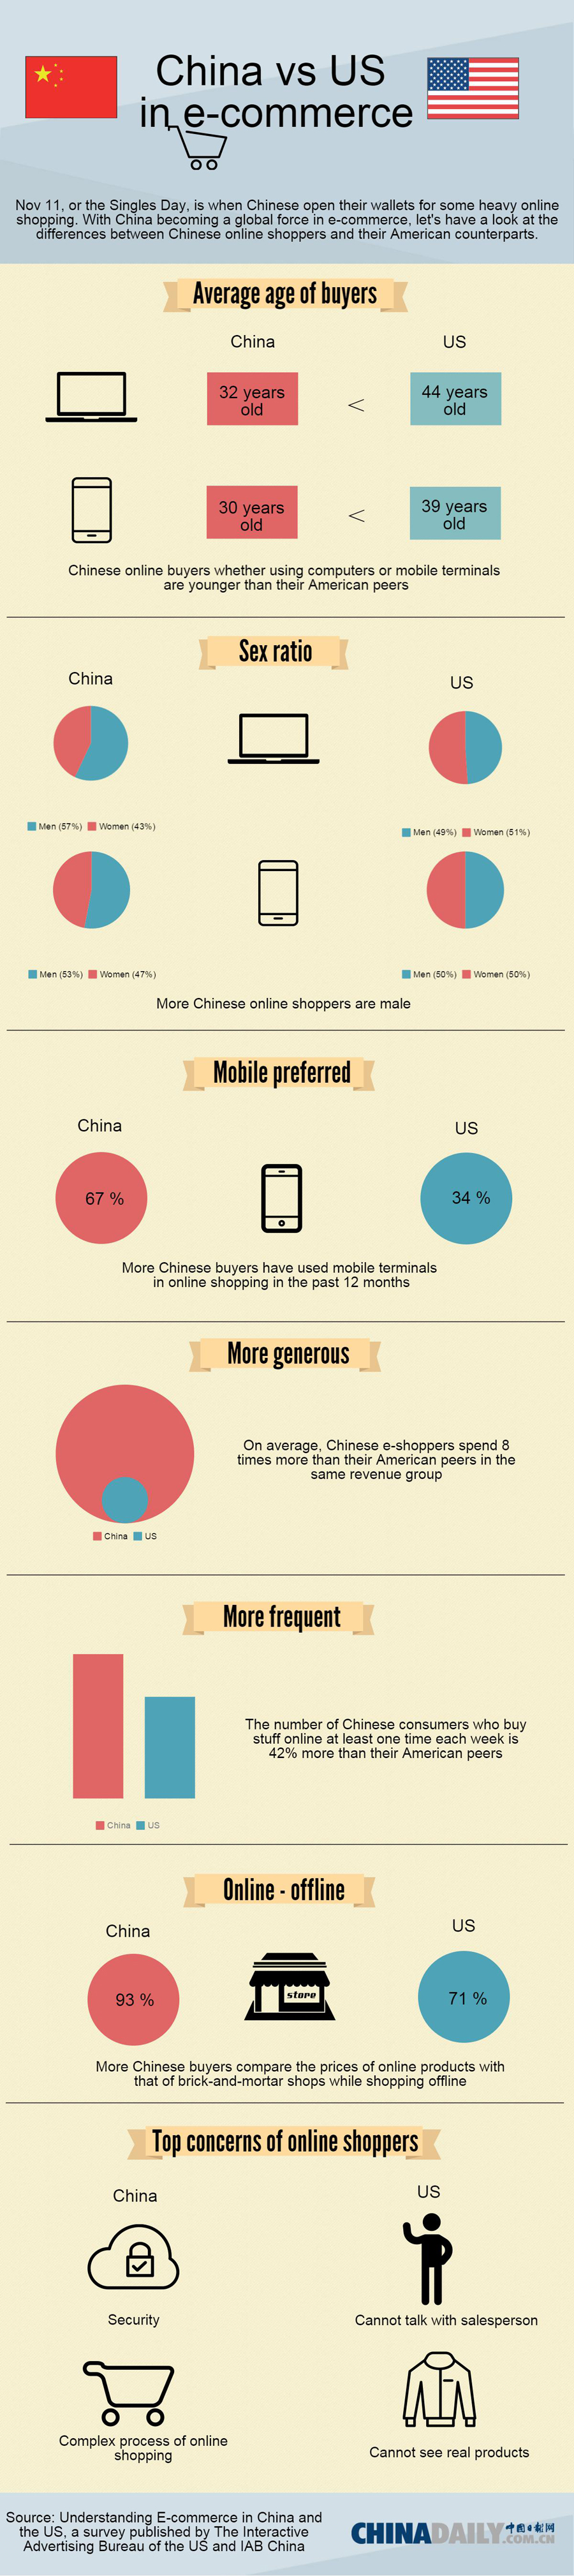 China versus US in e-commerce